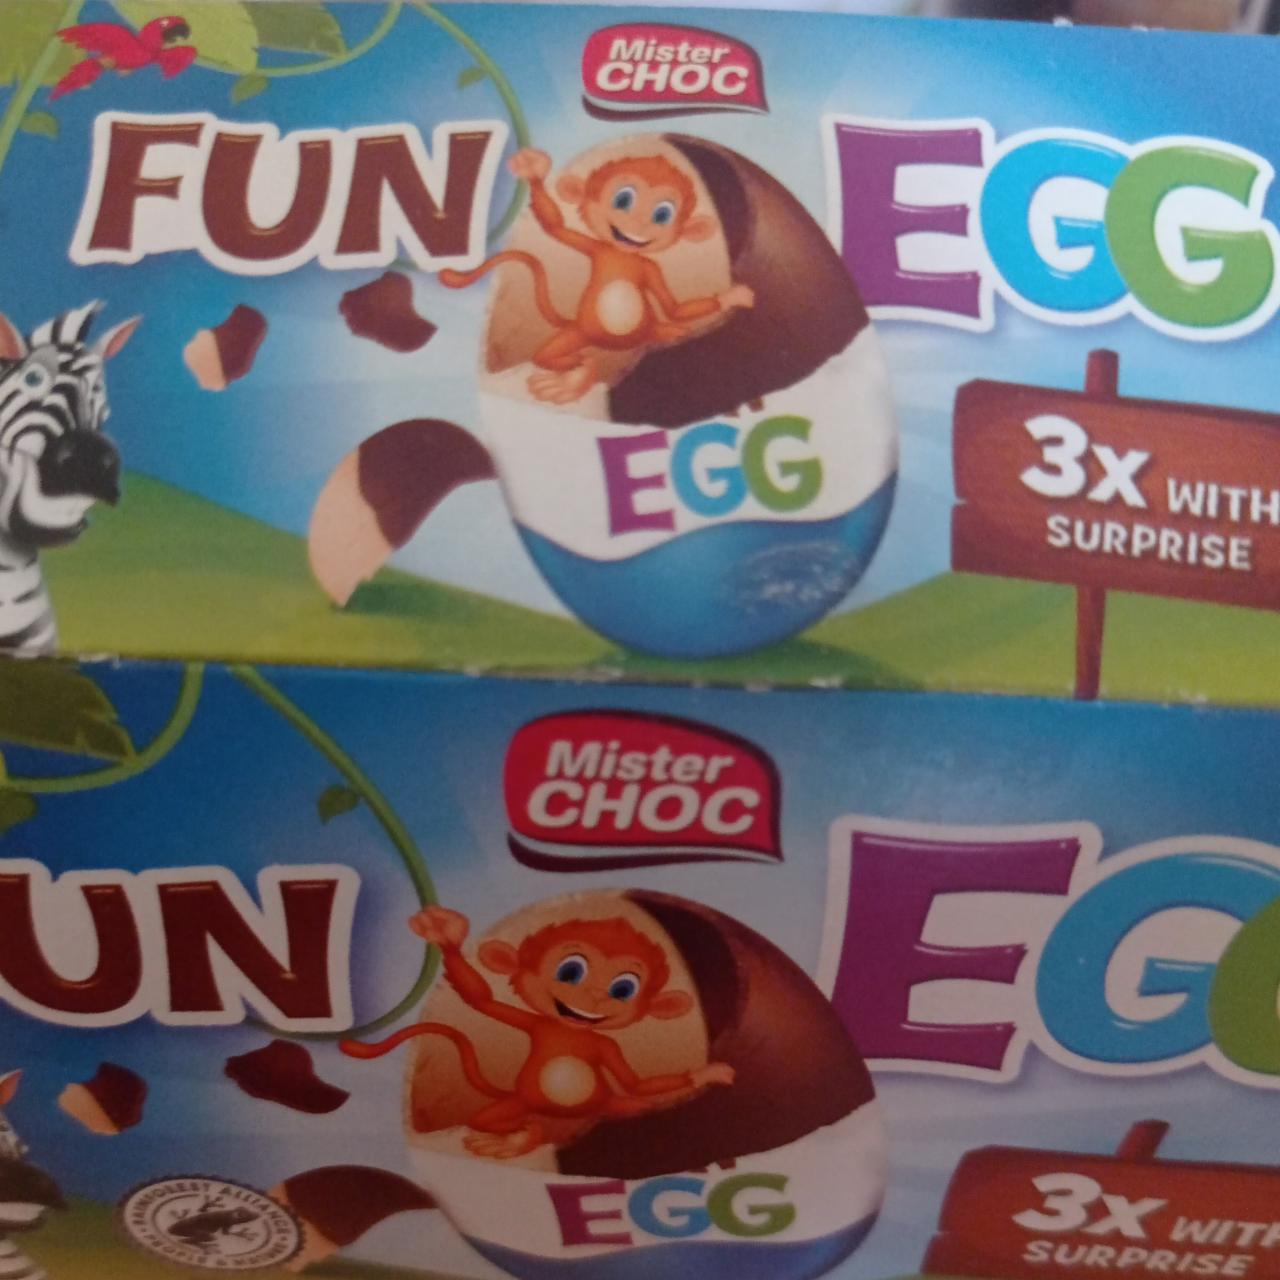 Фото - шоколадное яйцо Fun egg Mister Choc